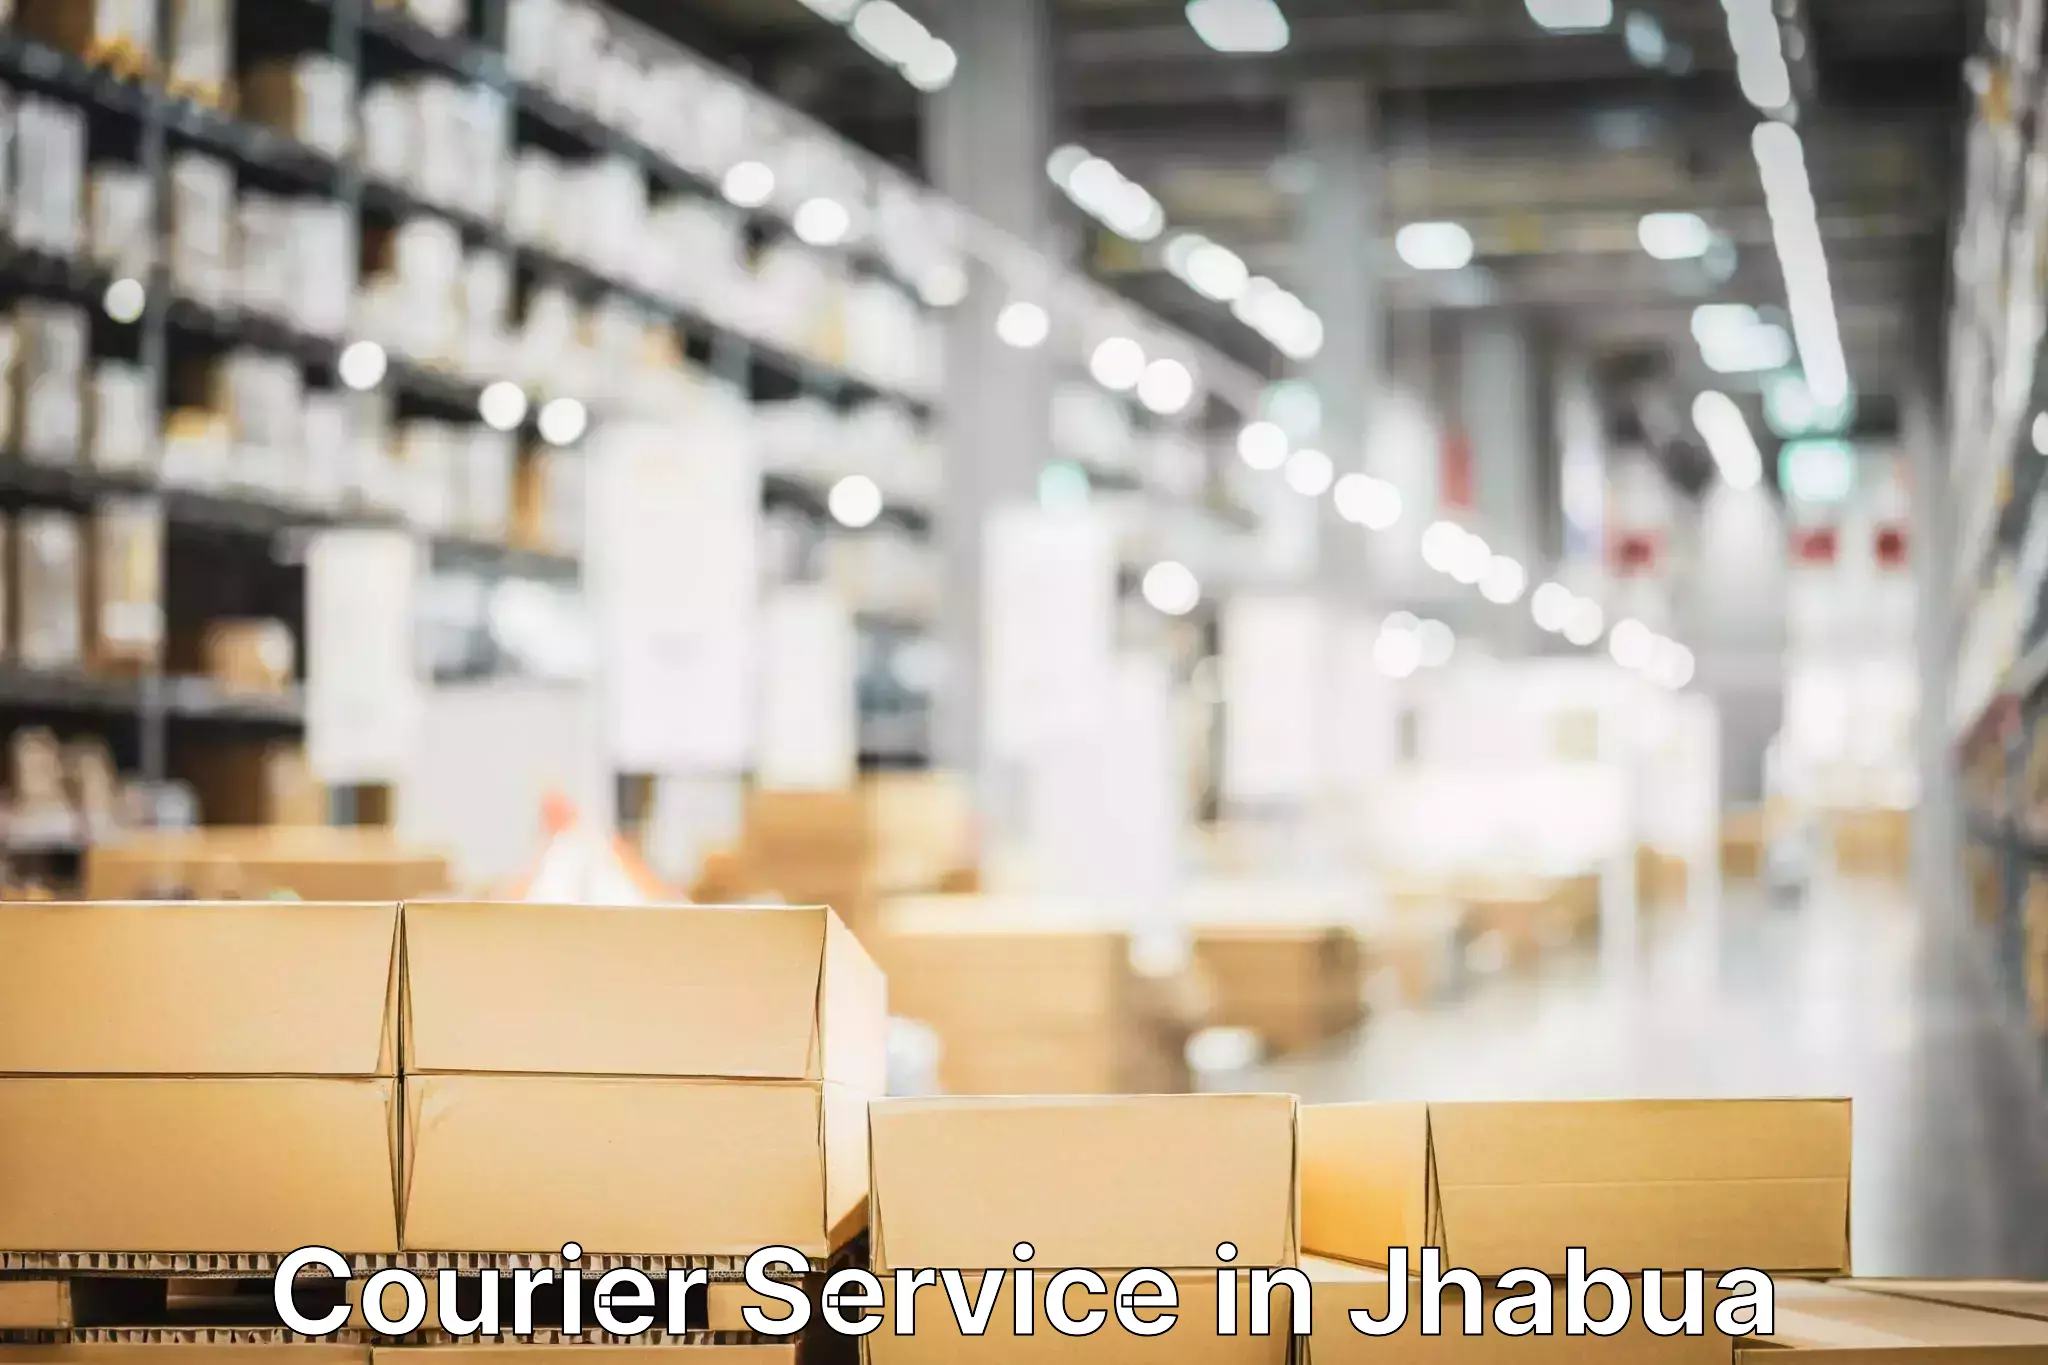 Seamless shipping experience in Jhabua